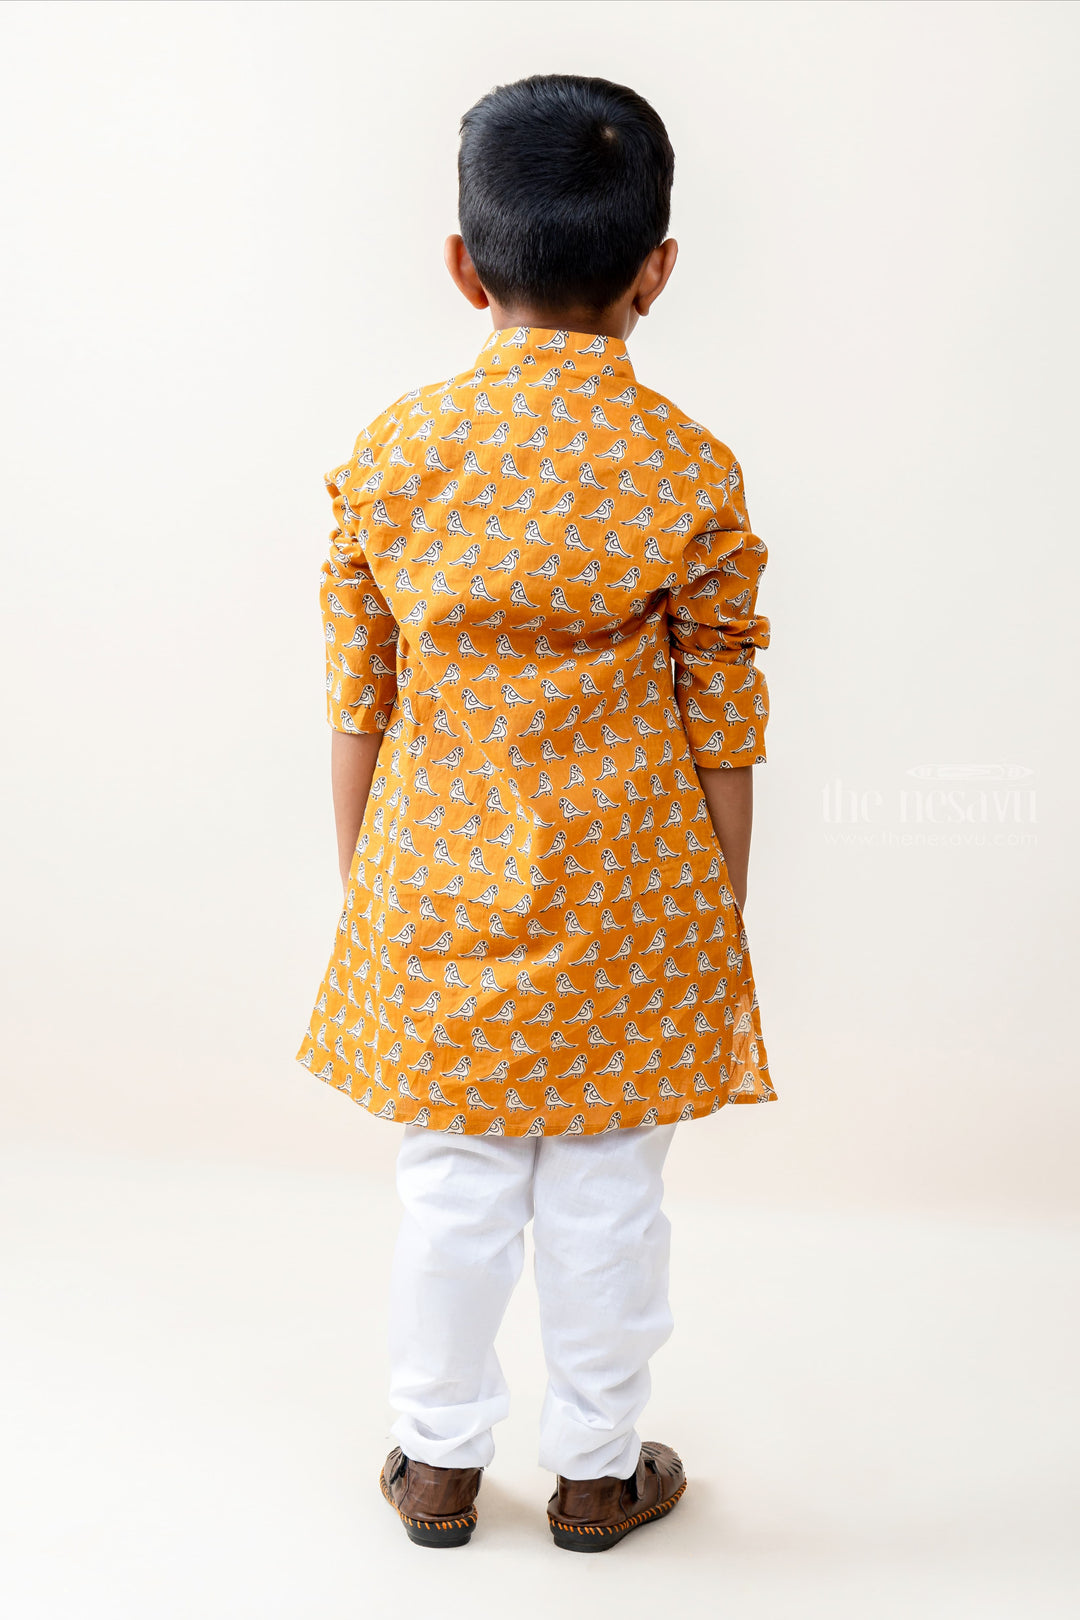 The Nesavu Ethnic Sets Songbird Prints - Mustard Yellow Shirt And Pure Cotton Pants psr silks Nesavu